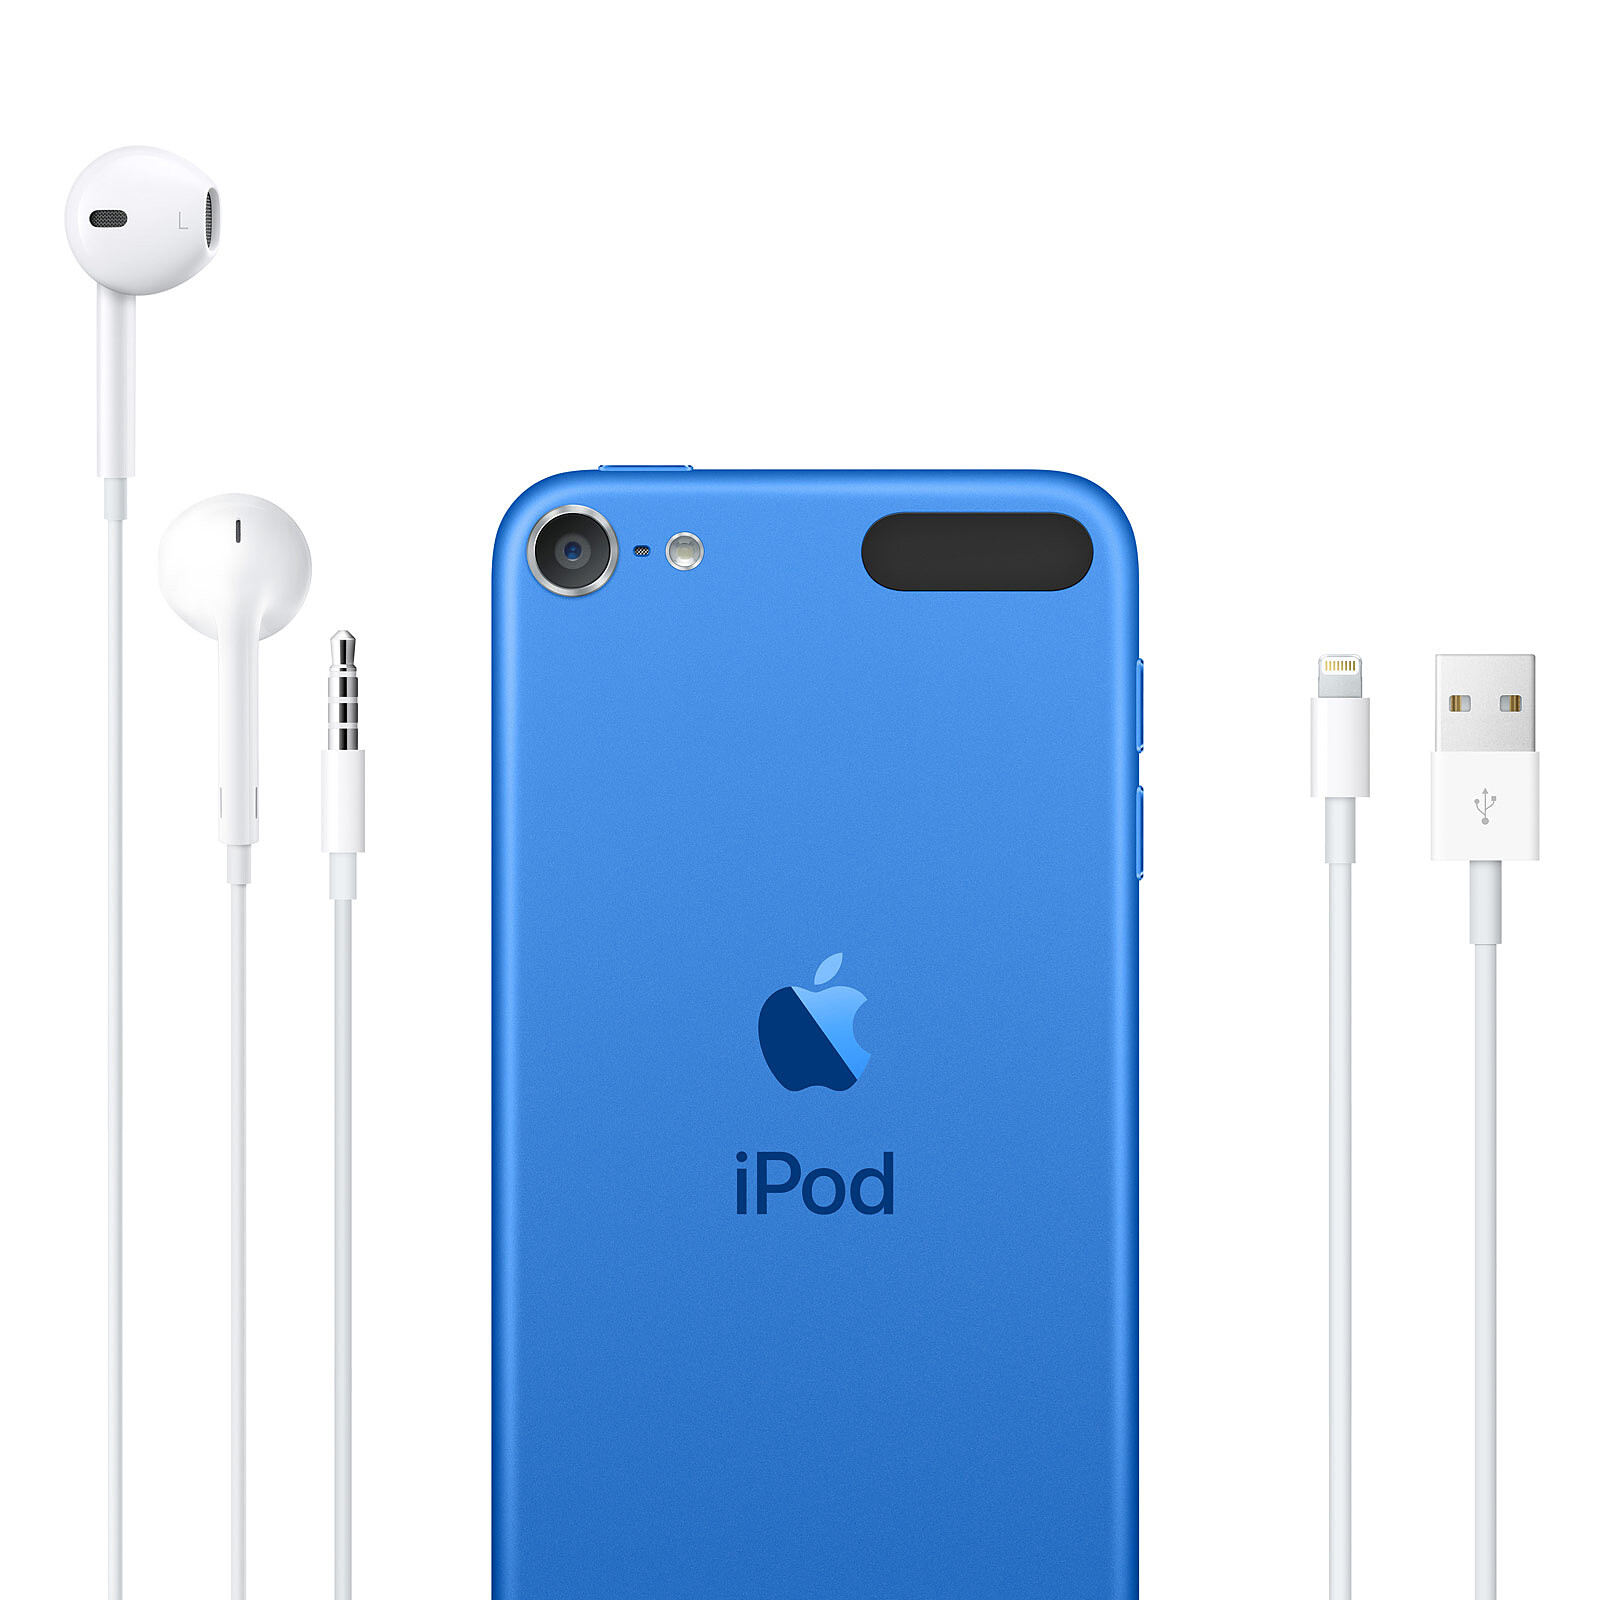 Erge, ernstige nul geluk Apple iPod touch (2019) 32 GB Blue - MP3 player & iPod Apple on LDLC